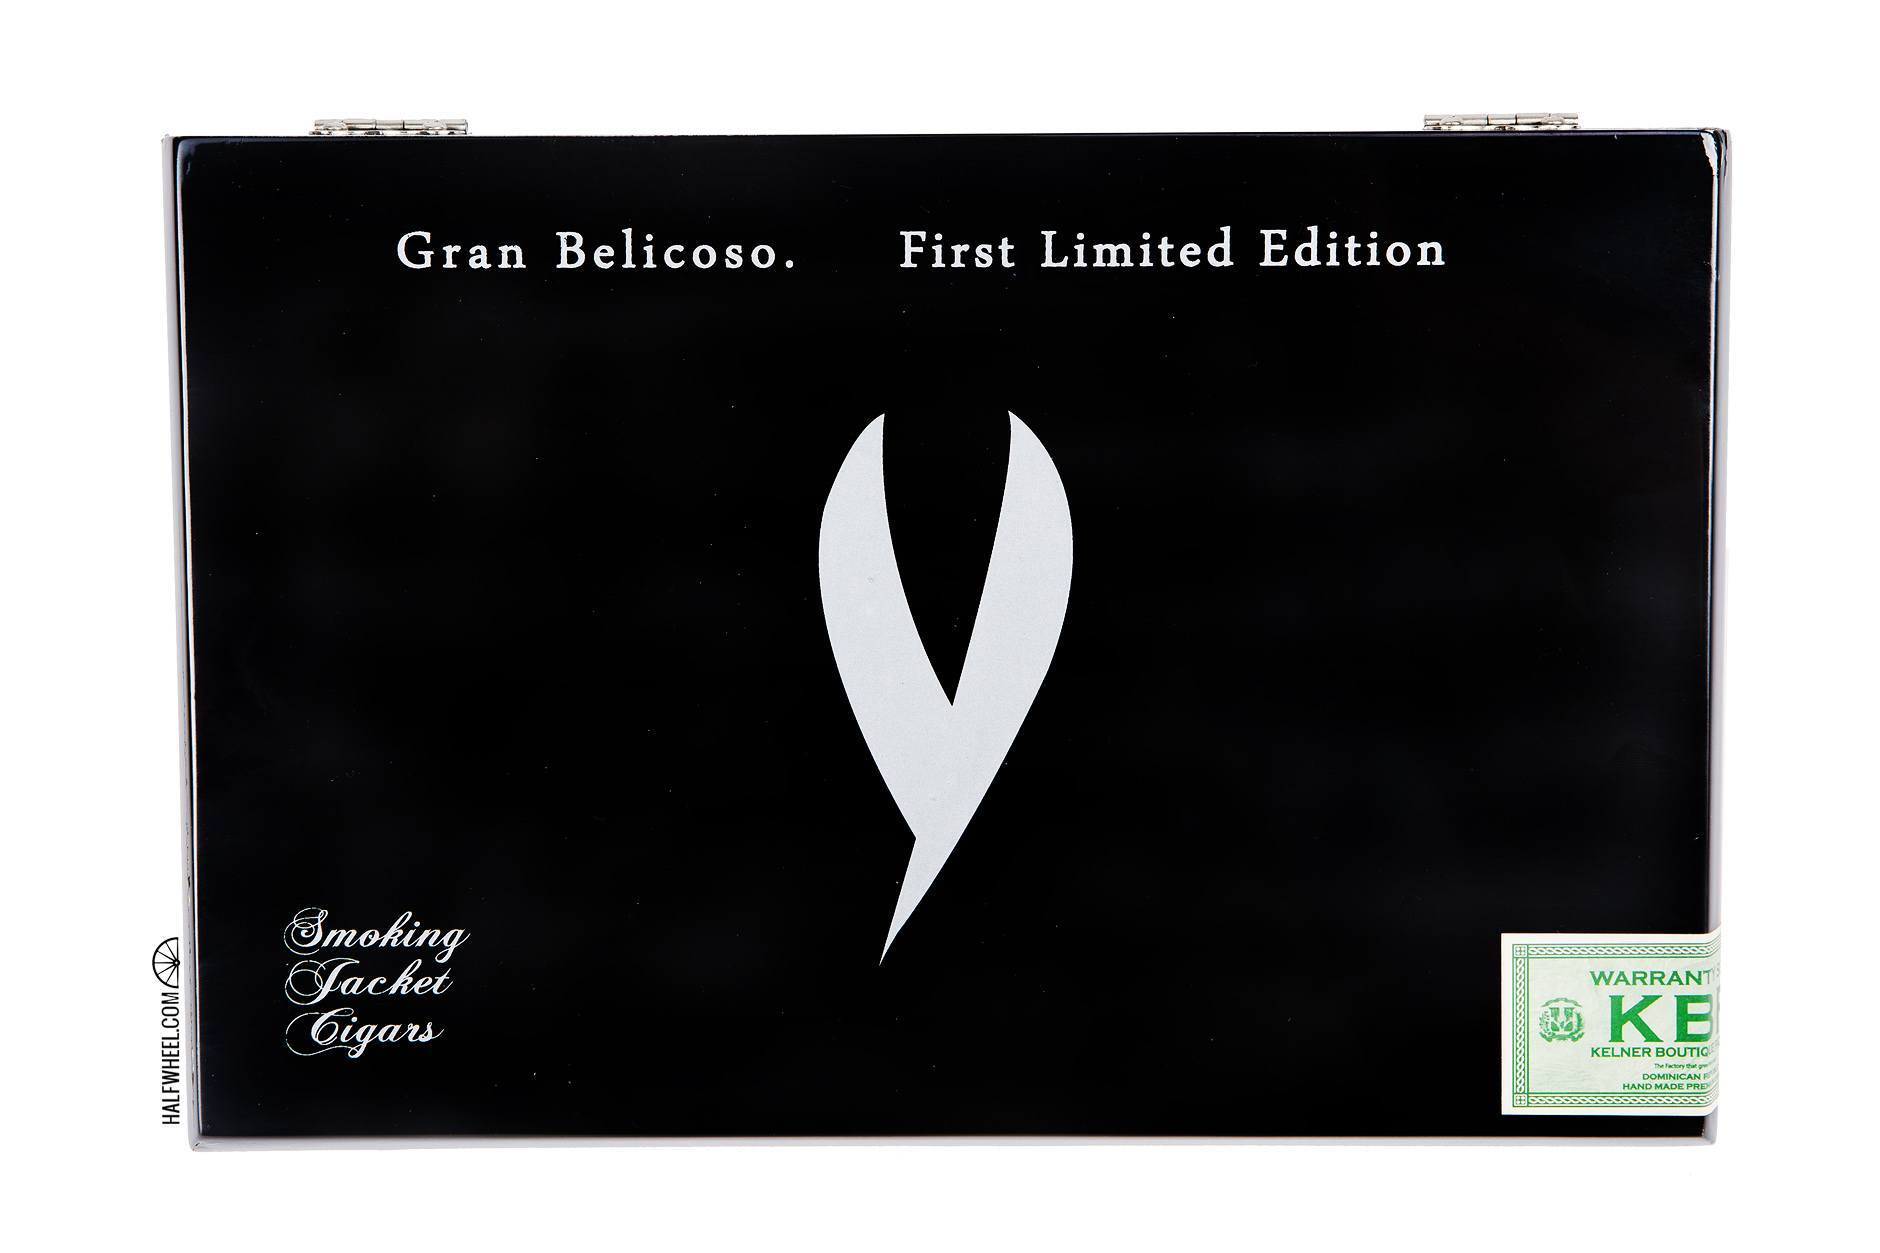 Smoking Jacket Limited Eiditon Gran Belicoso Box 1